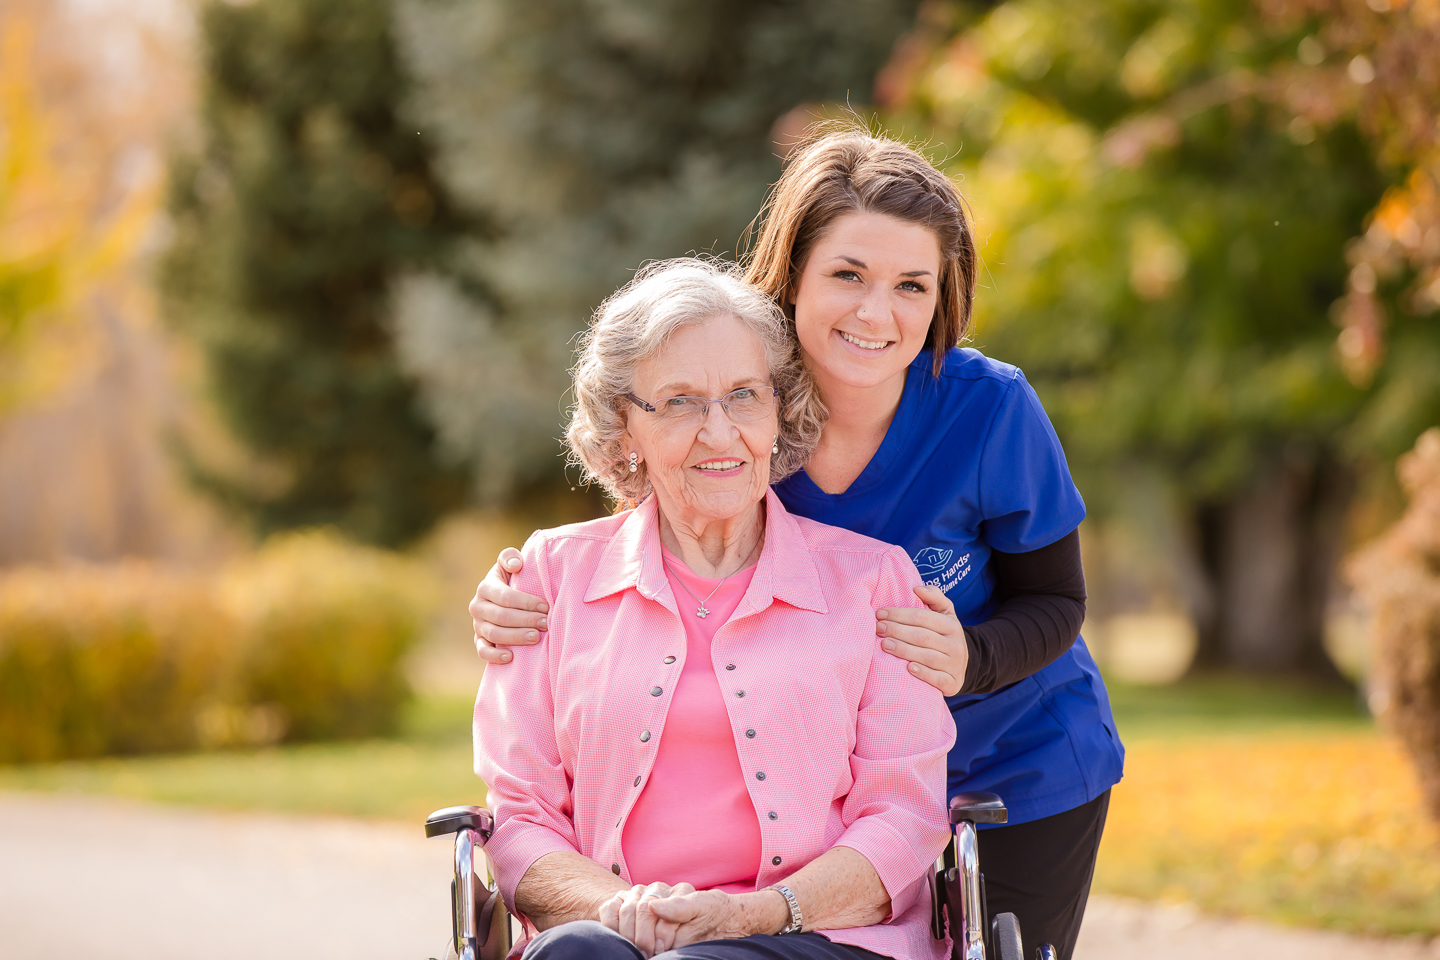 Assisting Hands Home Care caregiver and elderly